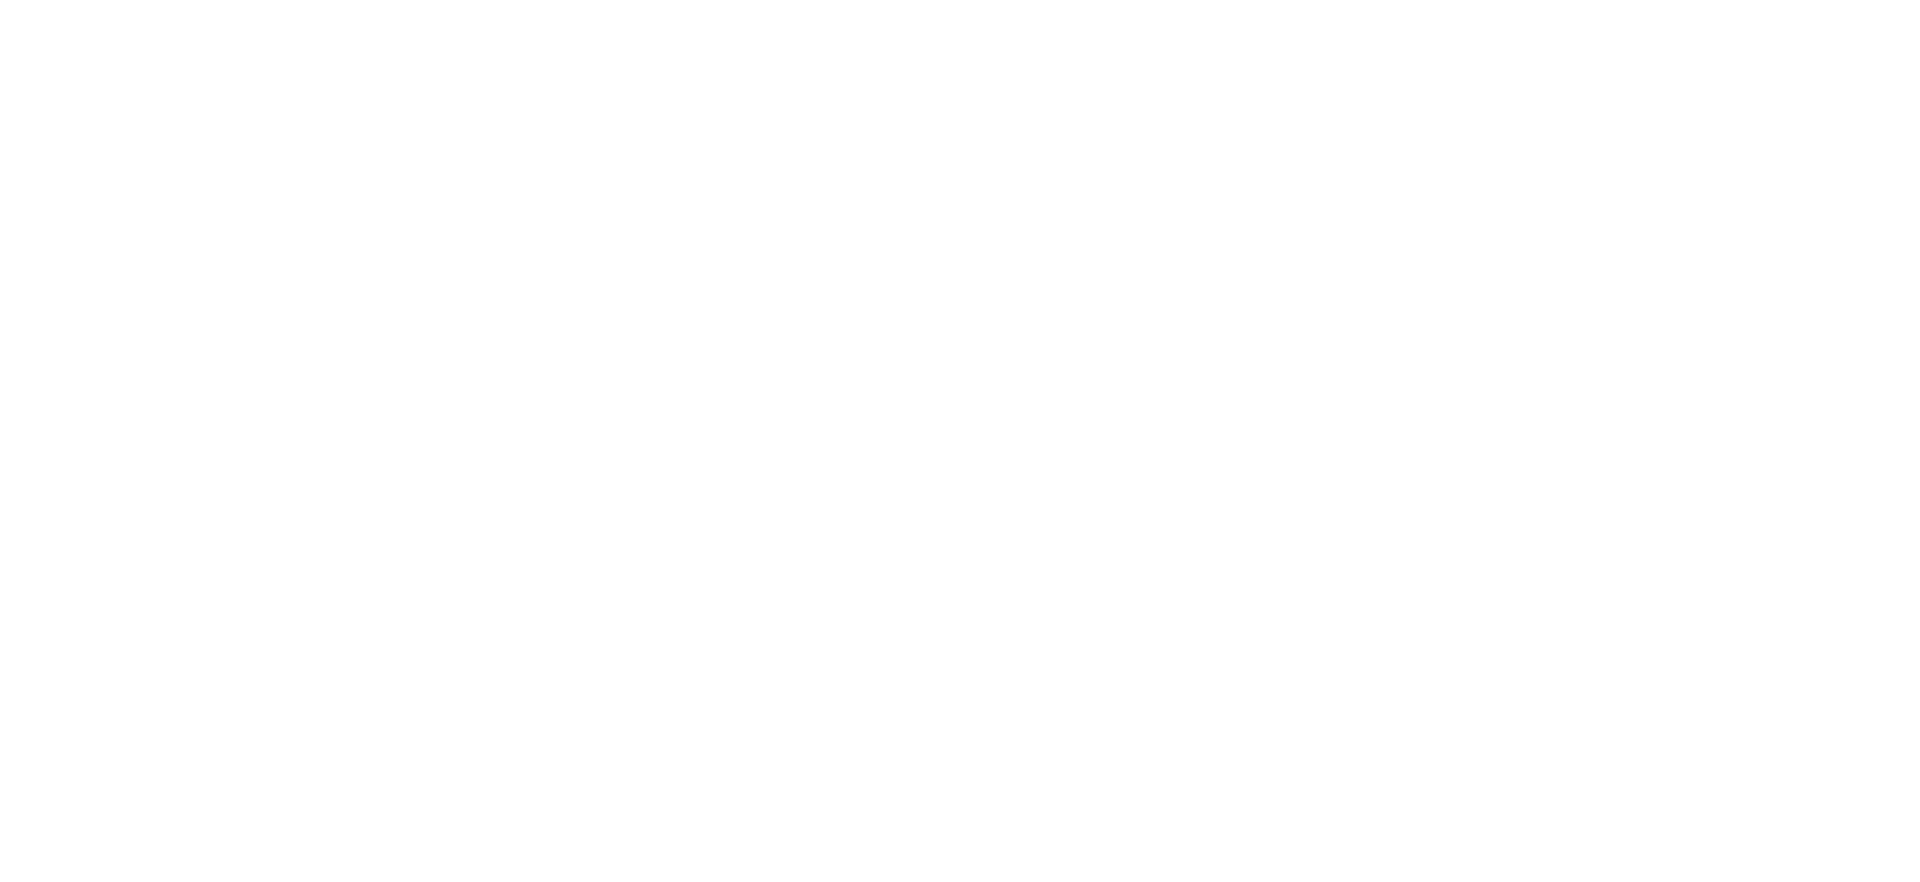 Cadbury Barn Trust logo